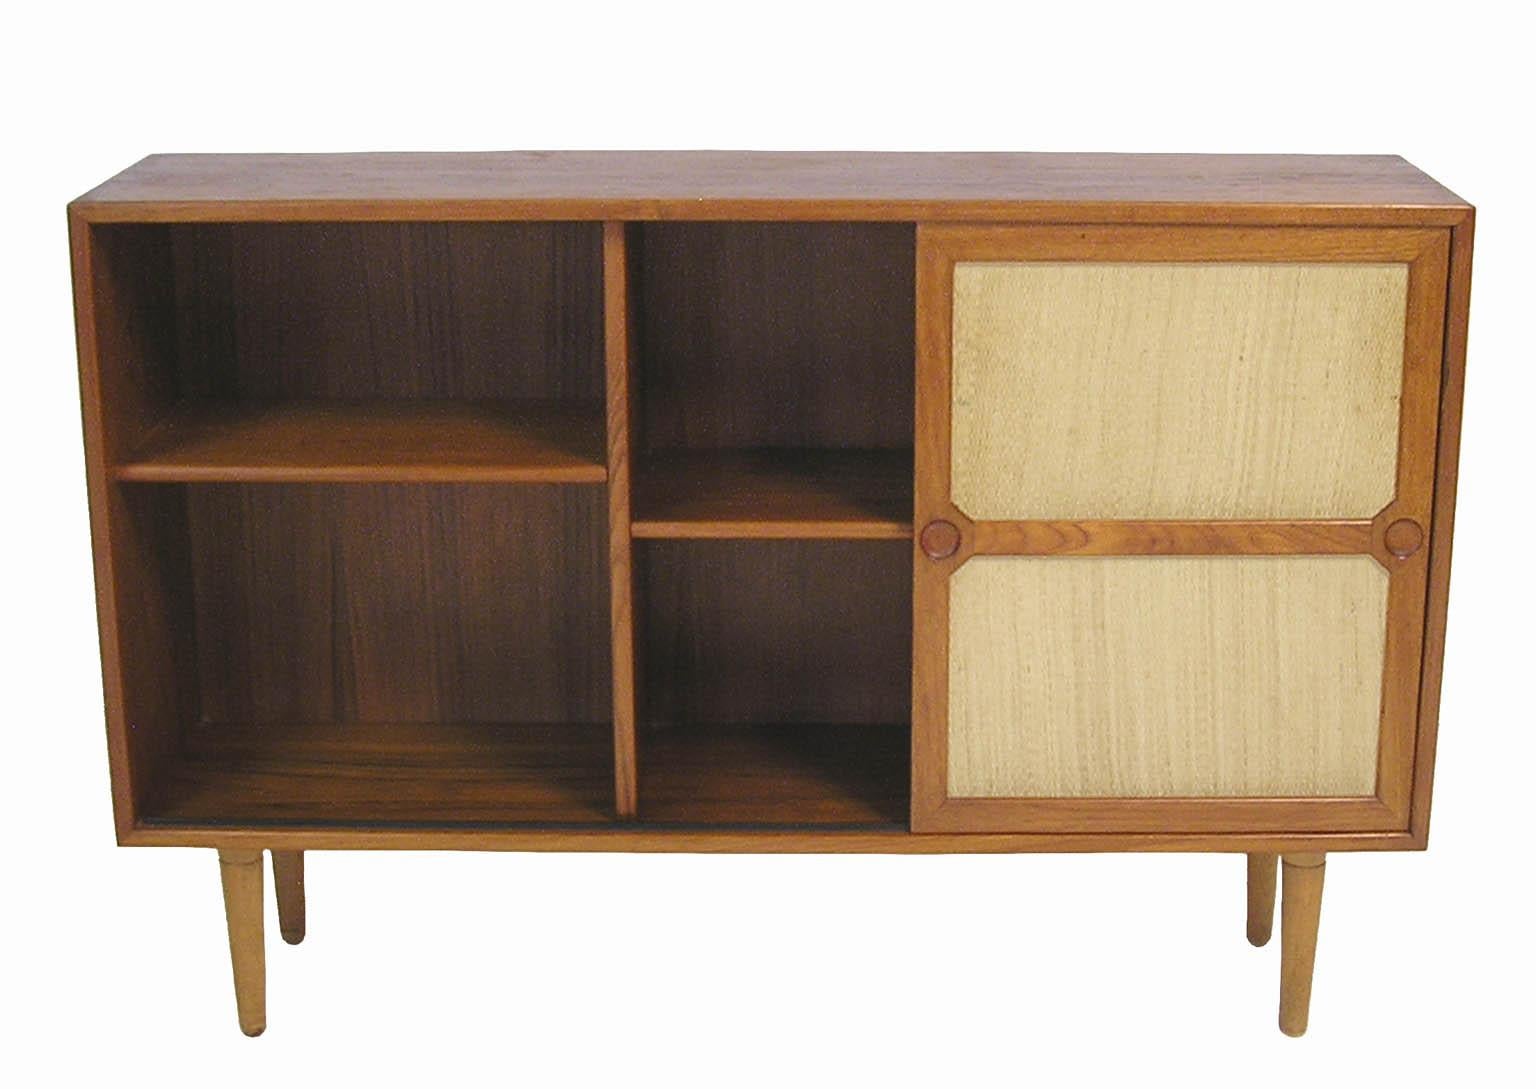 Mid-20th Century Rare Danish Modern Teak and Seagrass Bookshelf Cabinet, circa 1950s